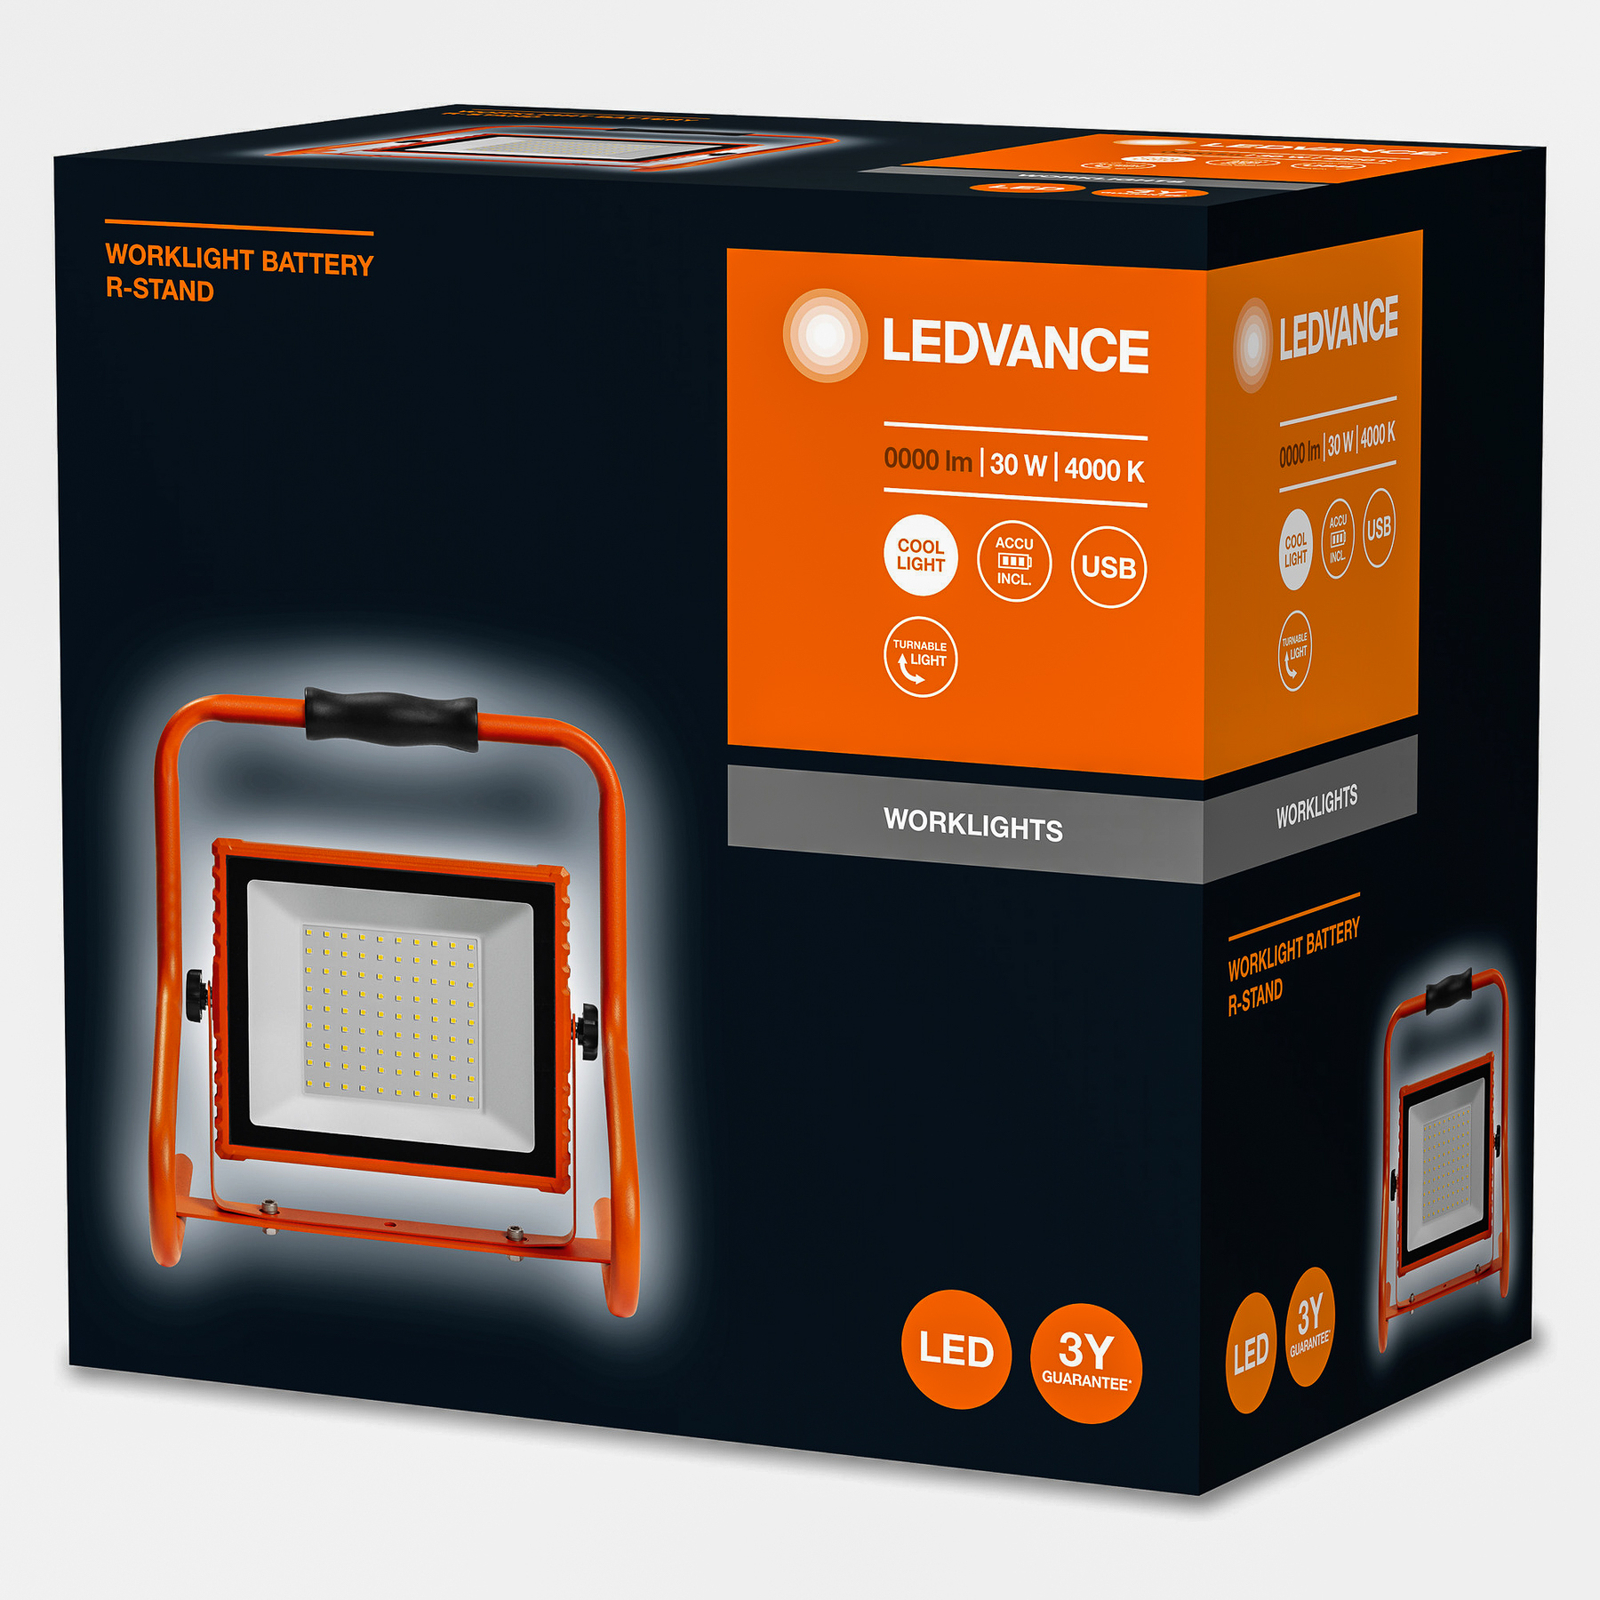 LEDVANCE Worklight Battery lampa robocza LED 30 W